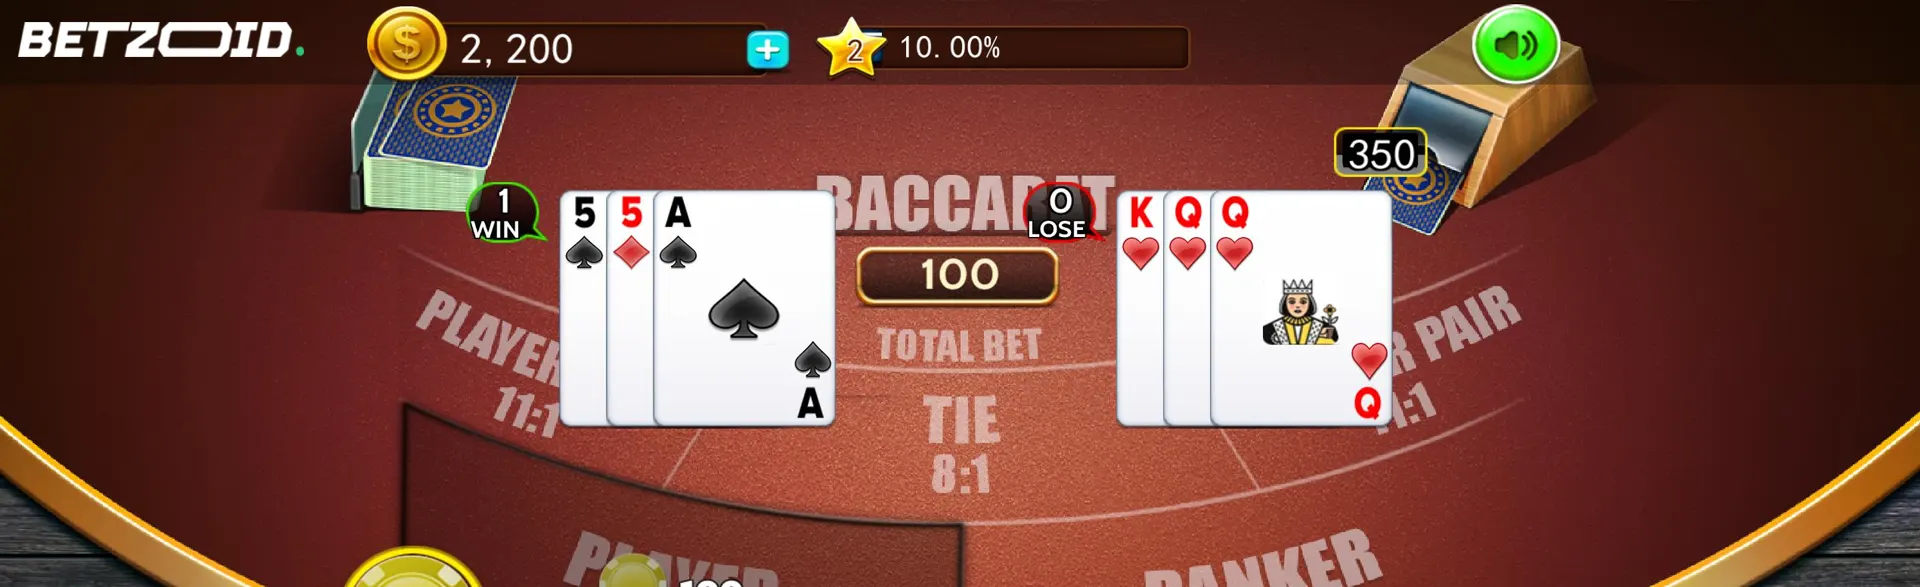 Mobile Baccara casino games.